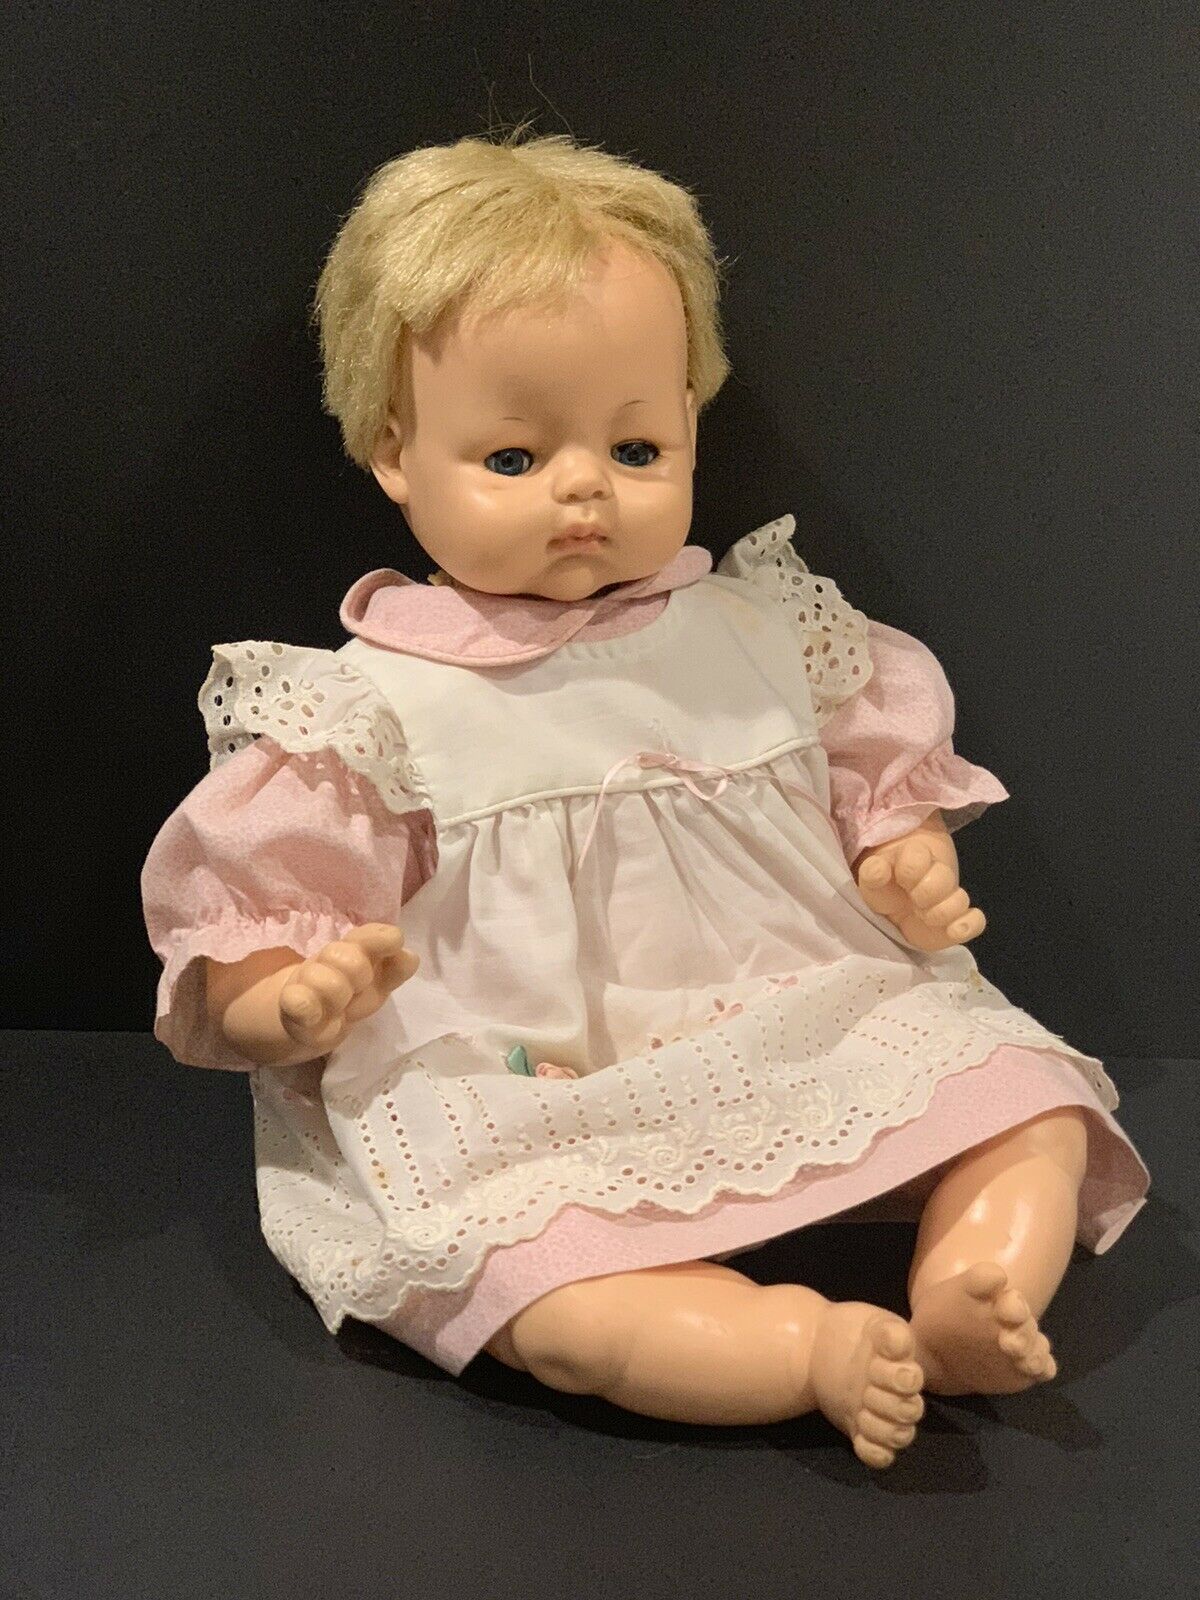 Large 21" Vintage Vinyl Cloth Baby Doll Marked Horsman Dolls 1961 - Fast Ship